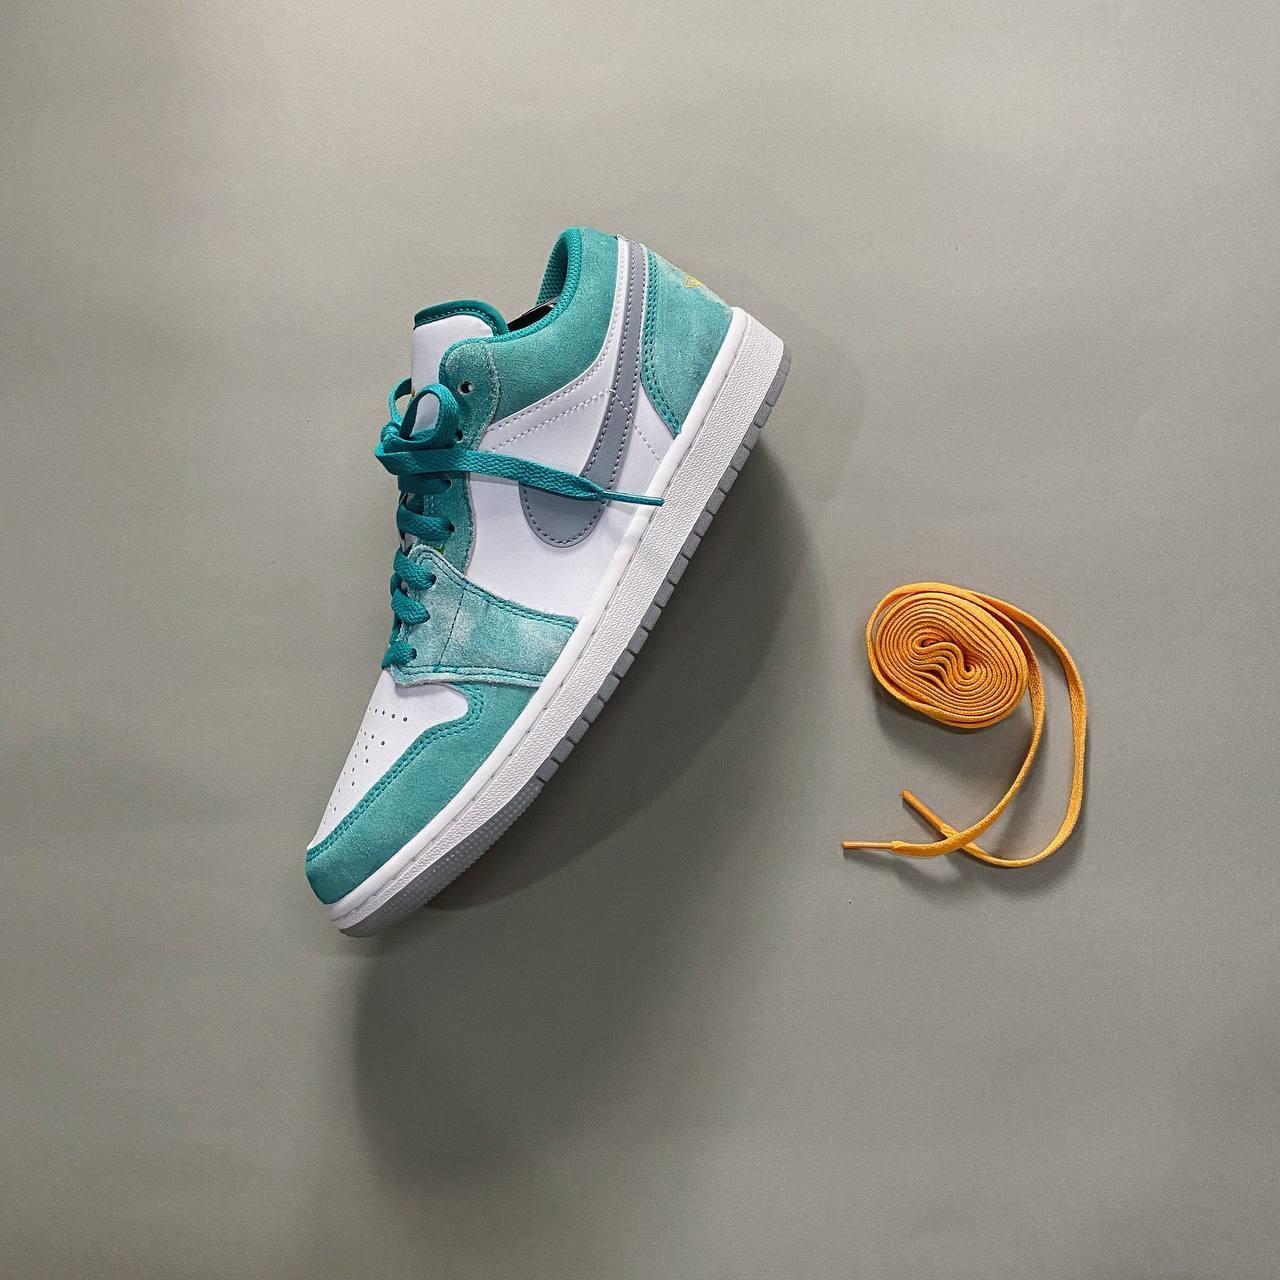 Minhshop.vn - Giày Nike Air Jordan 1 Low SE 'New Emerald' [DN3705 301]